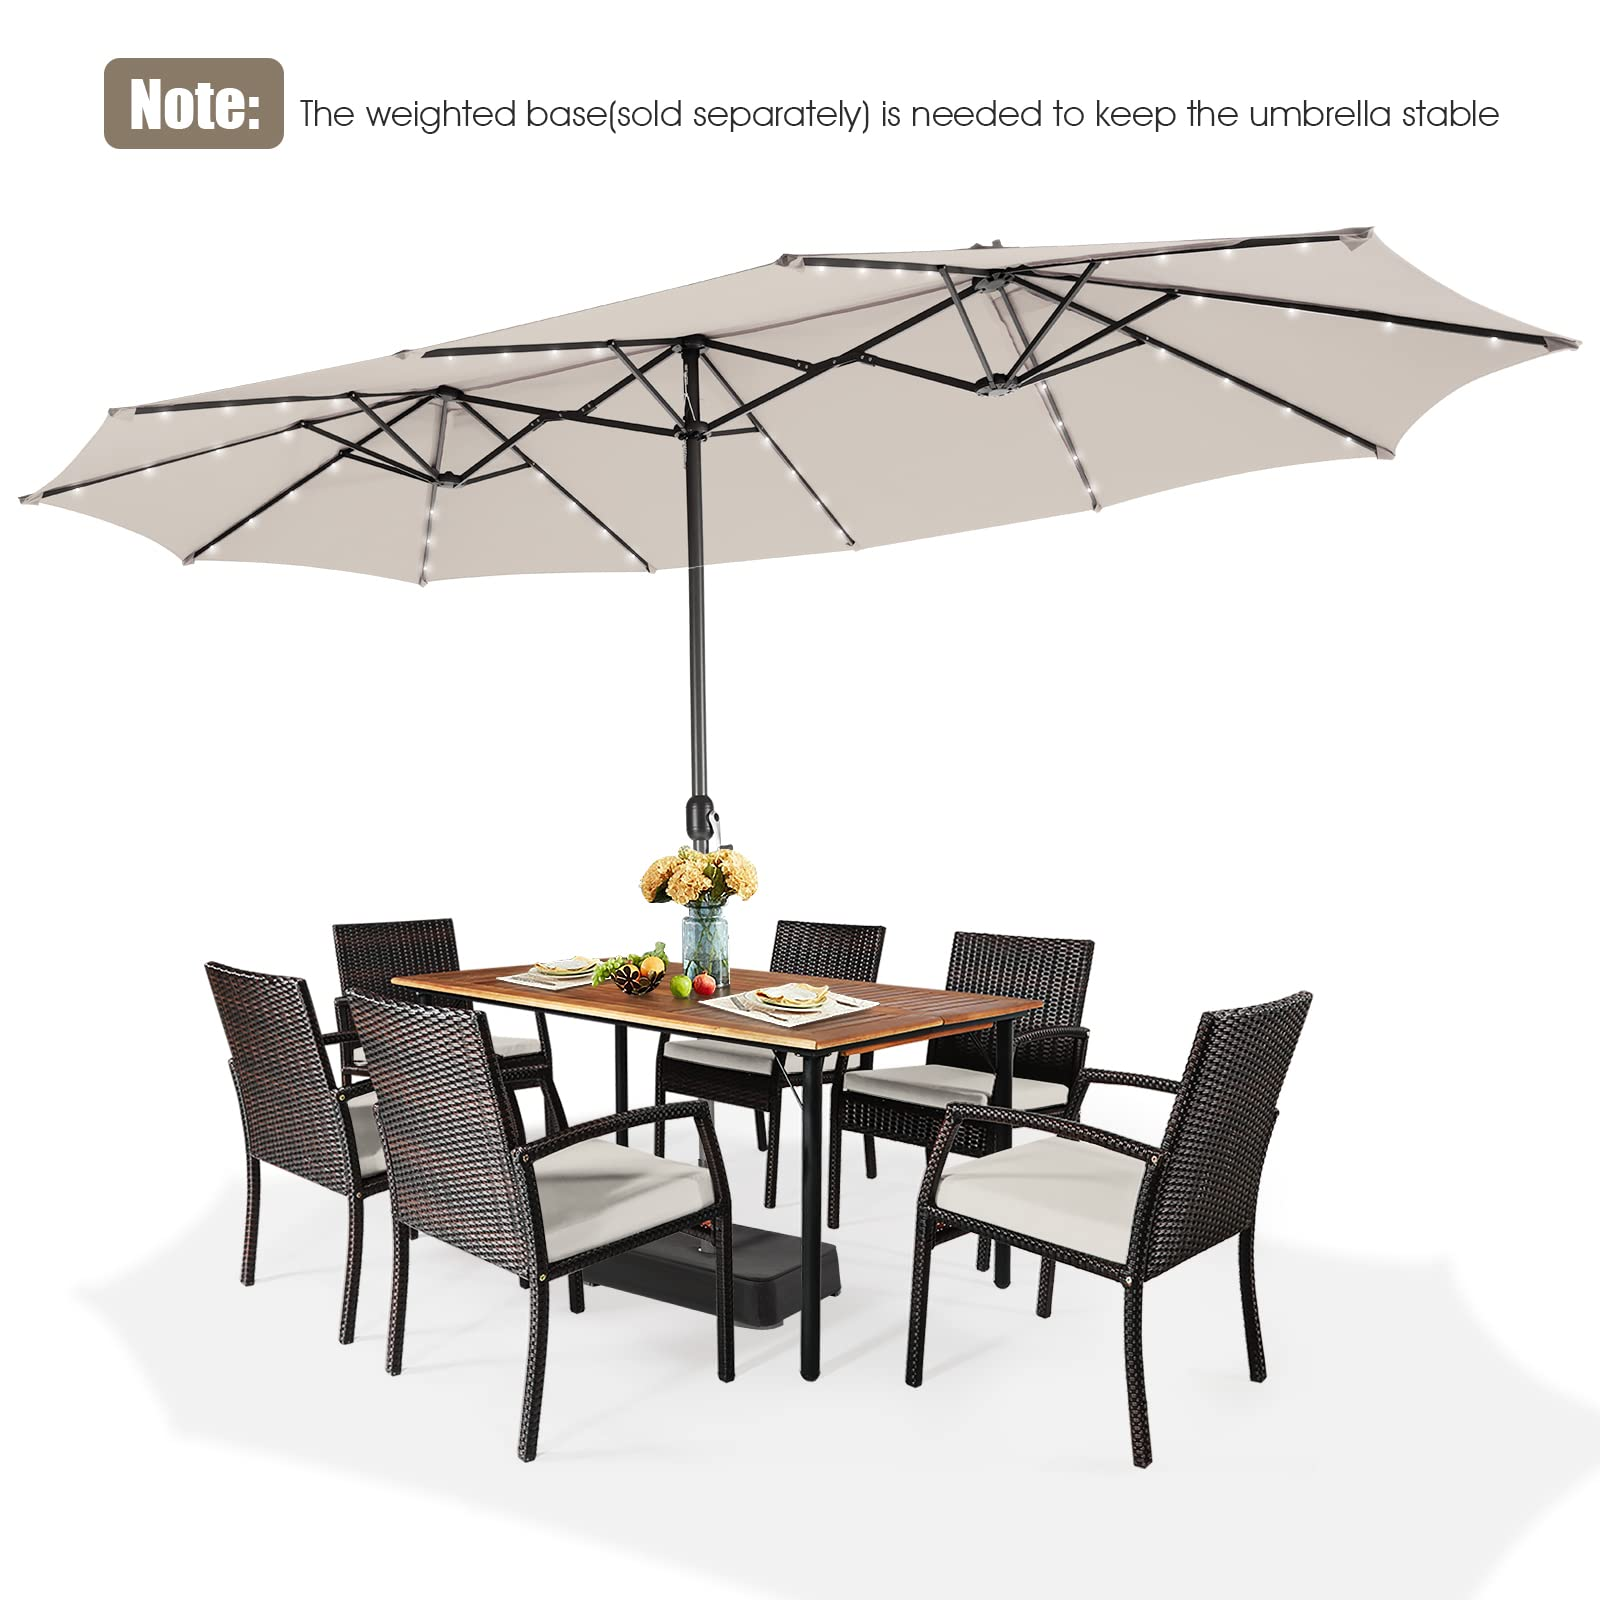 Giantex 15 FT Double Patio Umbrellas with 48 Solar LED Lights, Extra-Large Rectangle Umbrella